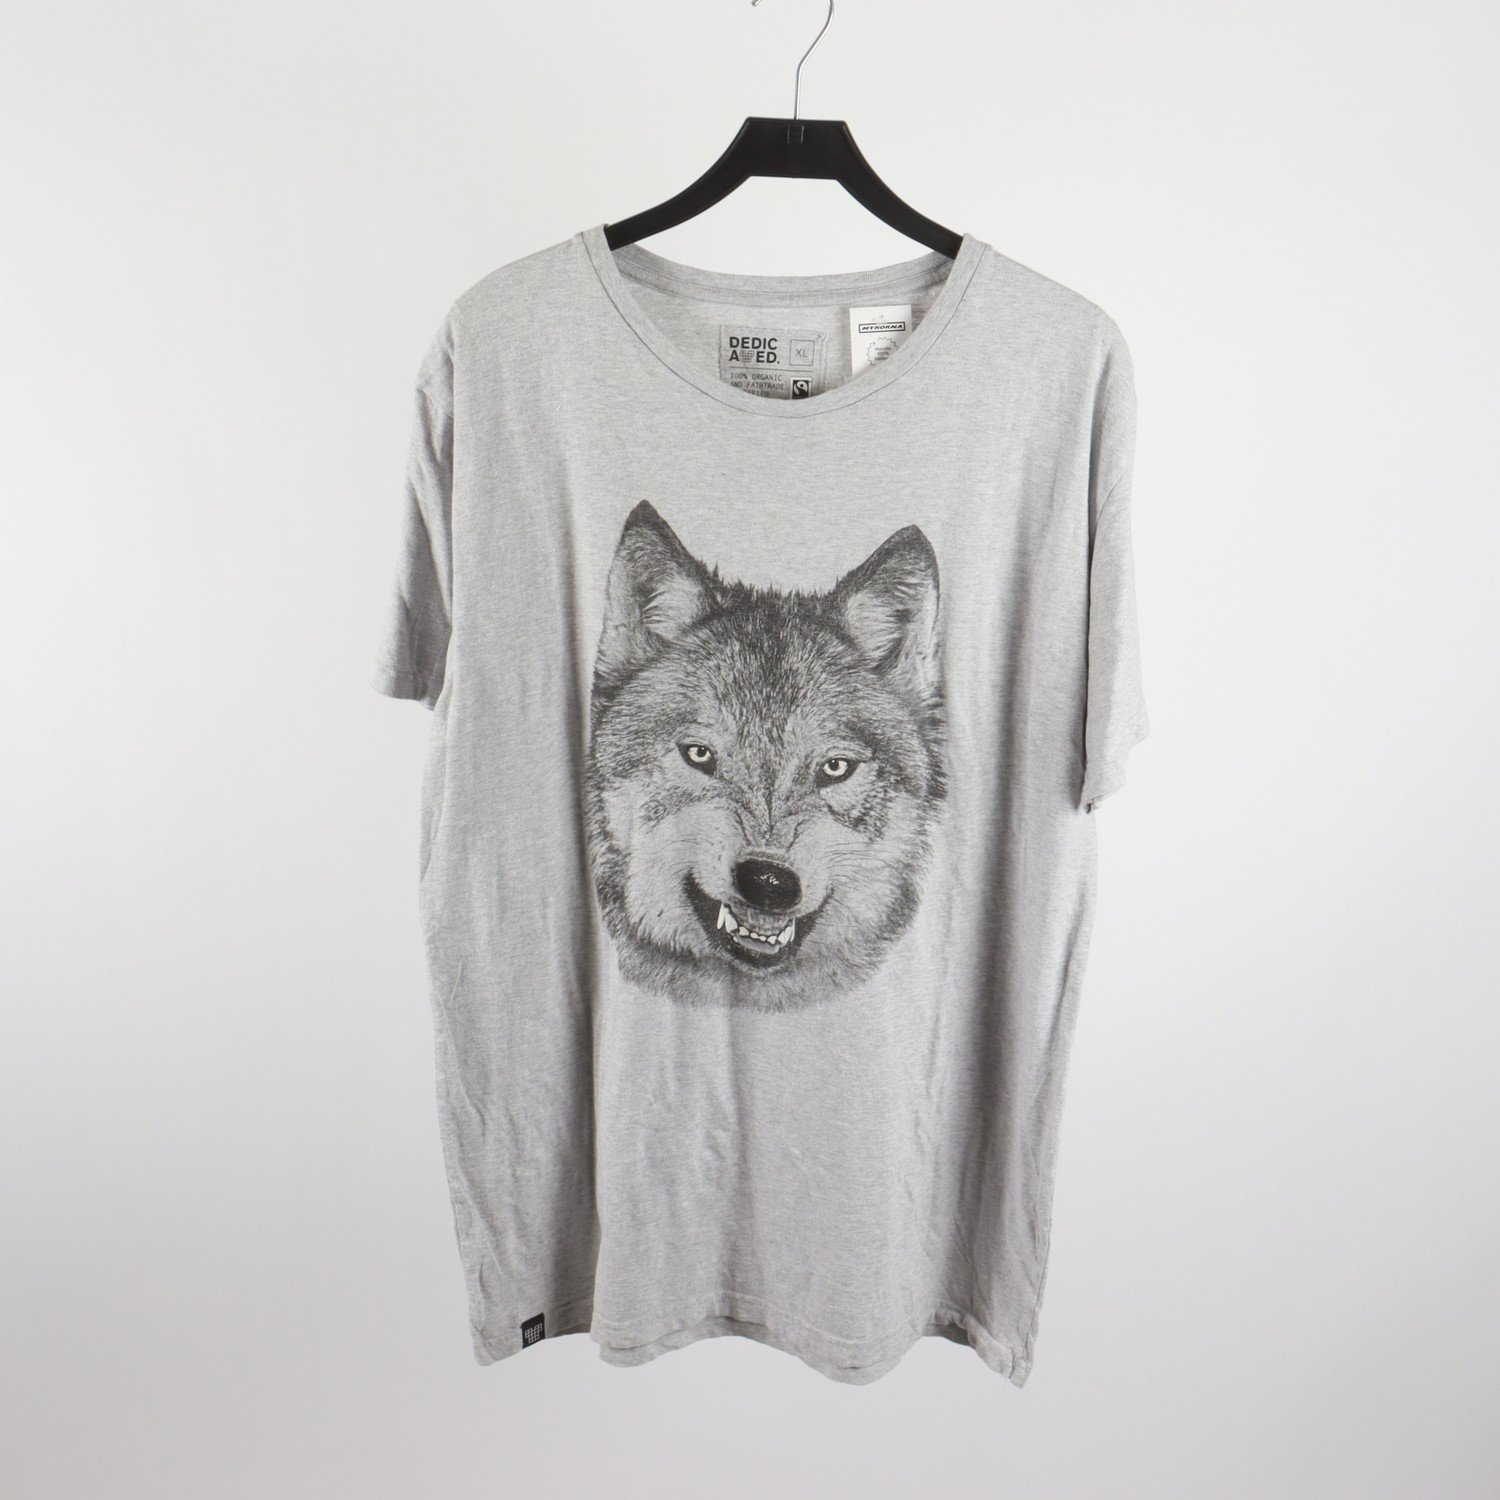 T-shirt, Dedicated, grå, stl. XL